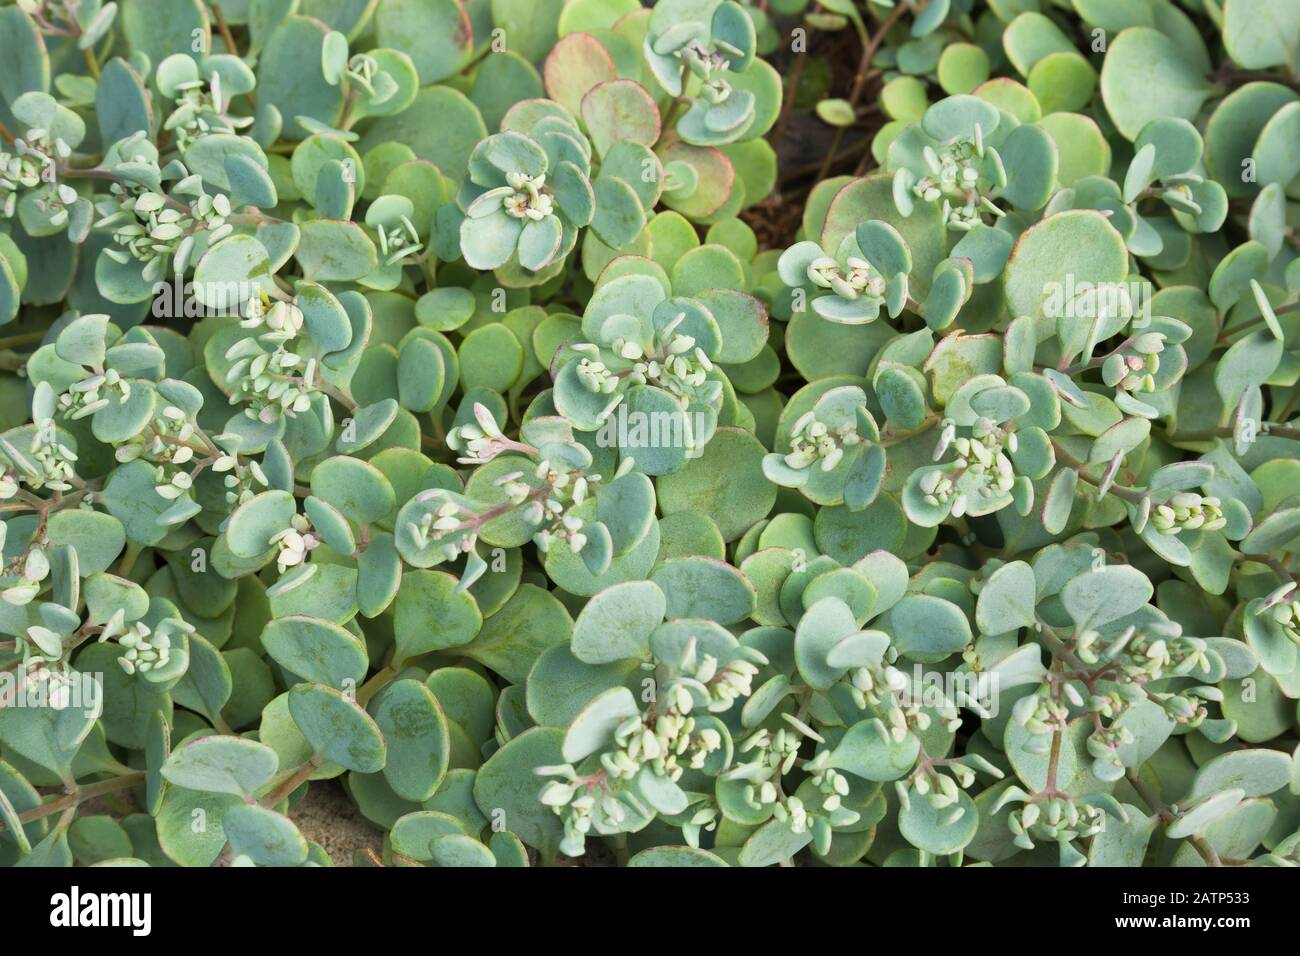 Spreading Sedum sieboldii 'October daphne' - Stonecrop succulent plants Stock Photo